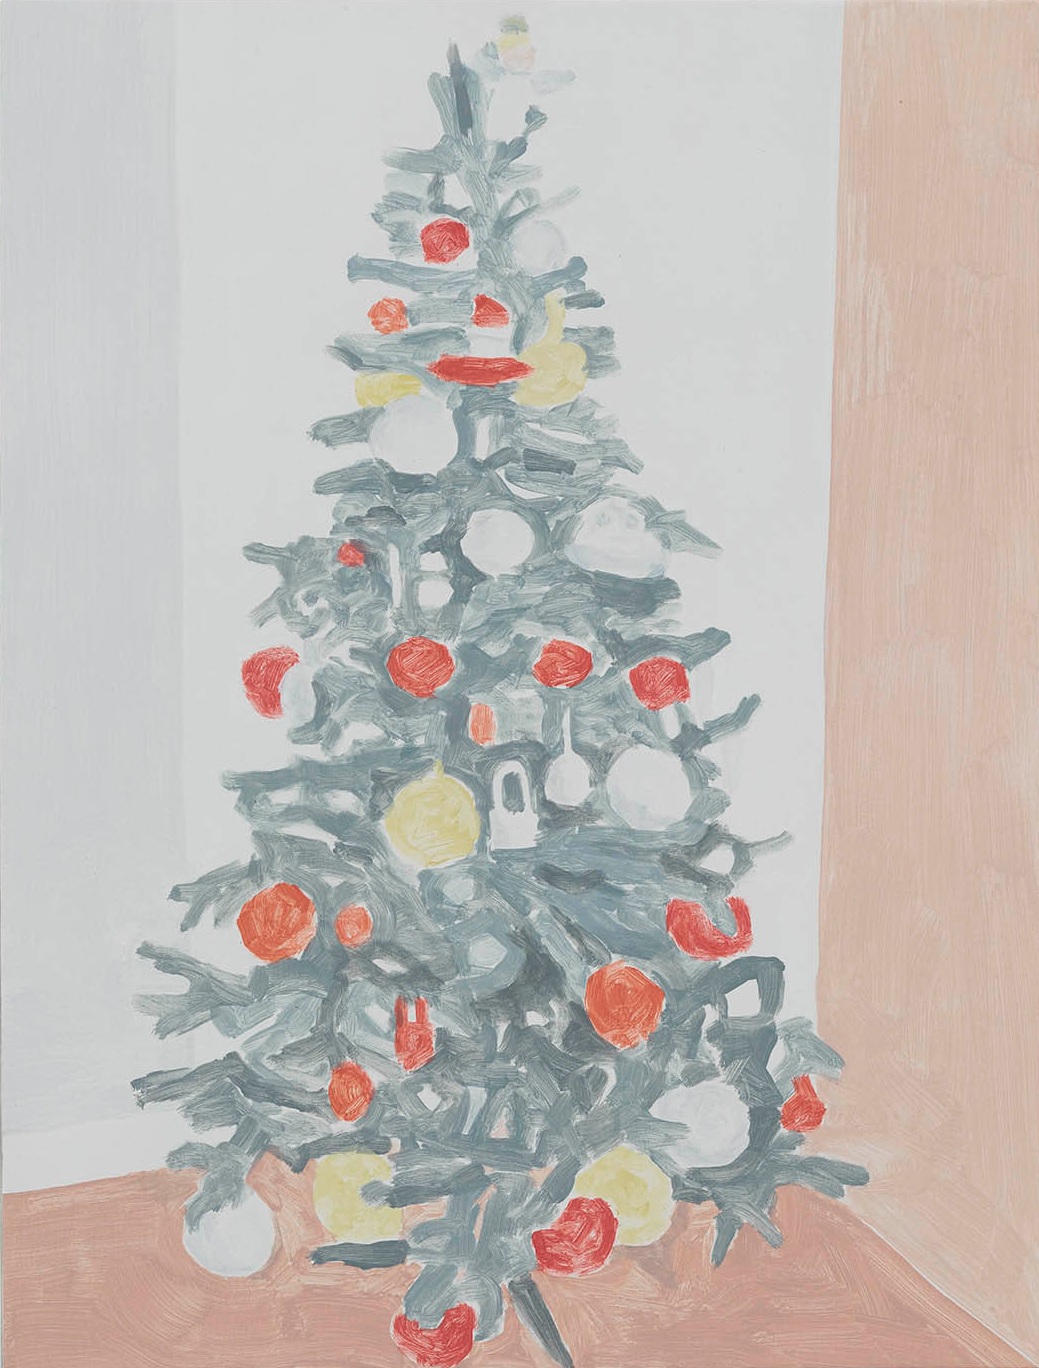  Xmas Tree (pompoms), acrylic on canvas, 32 x 24.25 inches, 2016. 